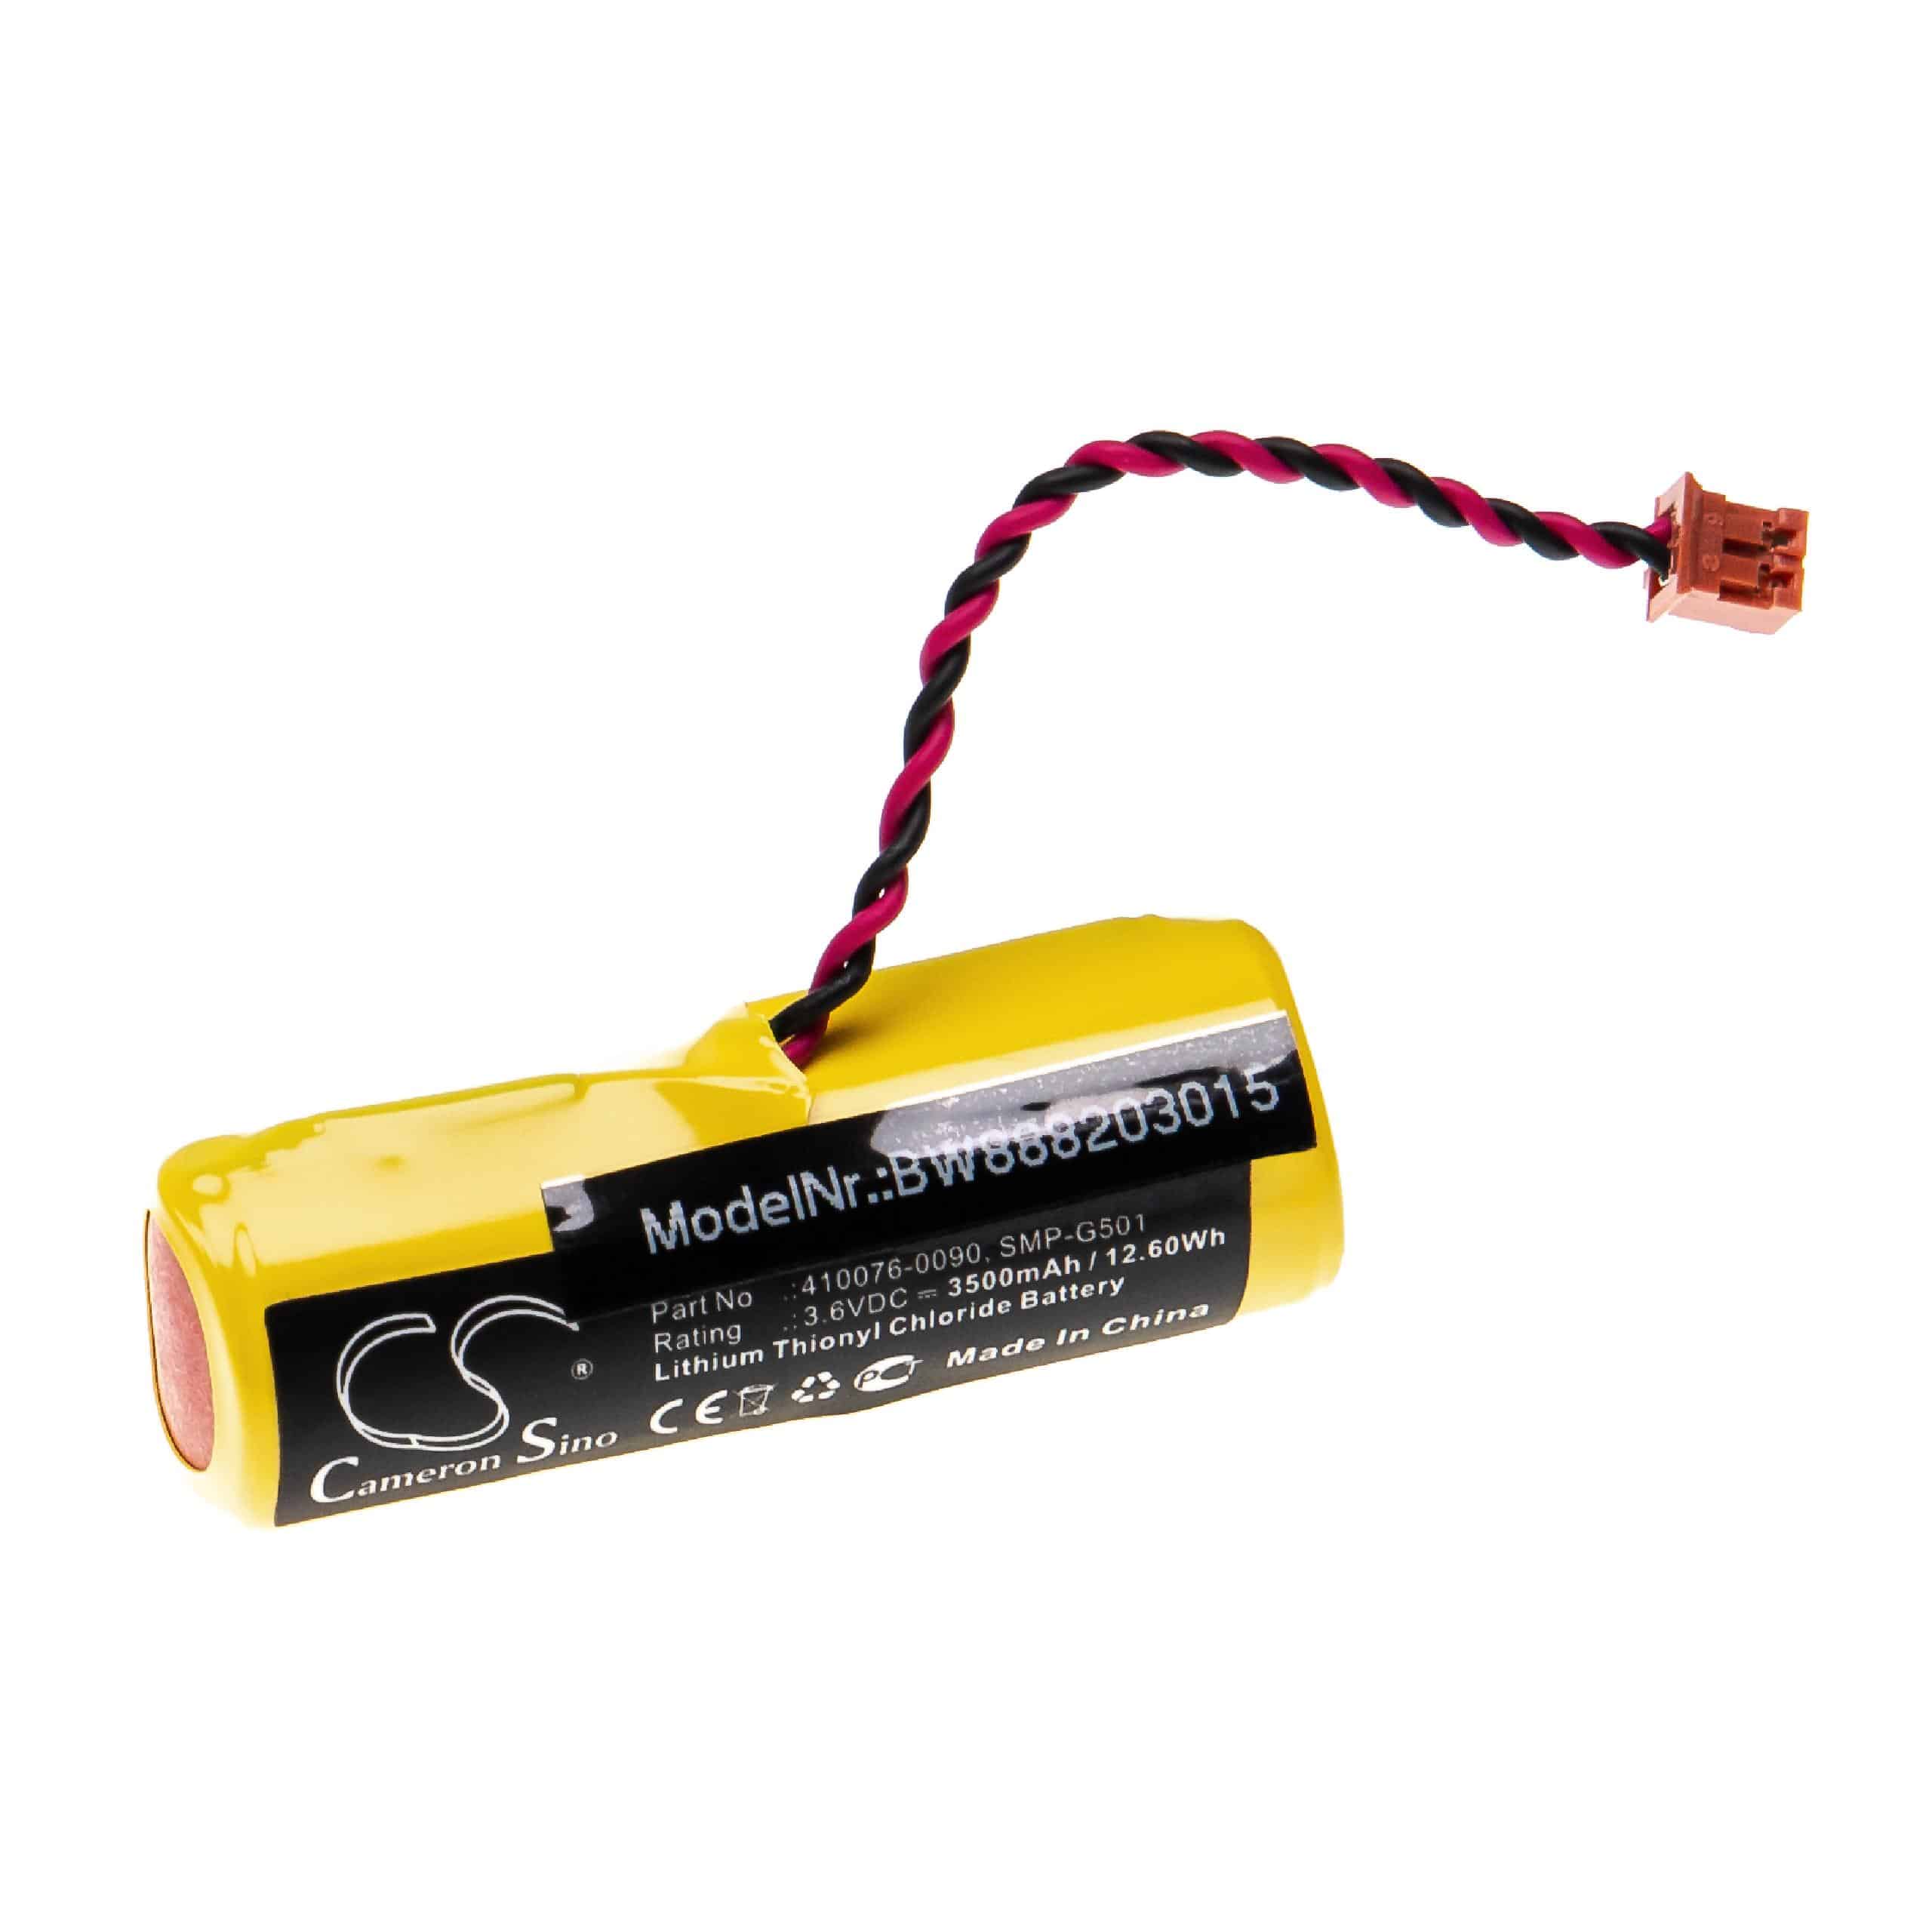 CNC Controller Battery Replacement for Denso 410076-0090, 410076-0150, 410076-0180 - 3500mAh 3.6V Li-SOCl2